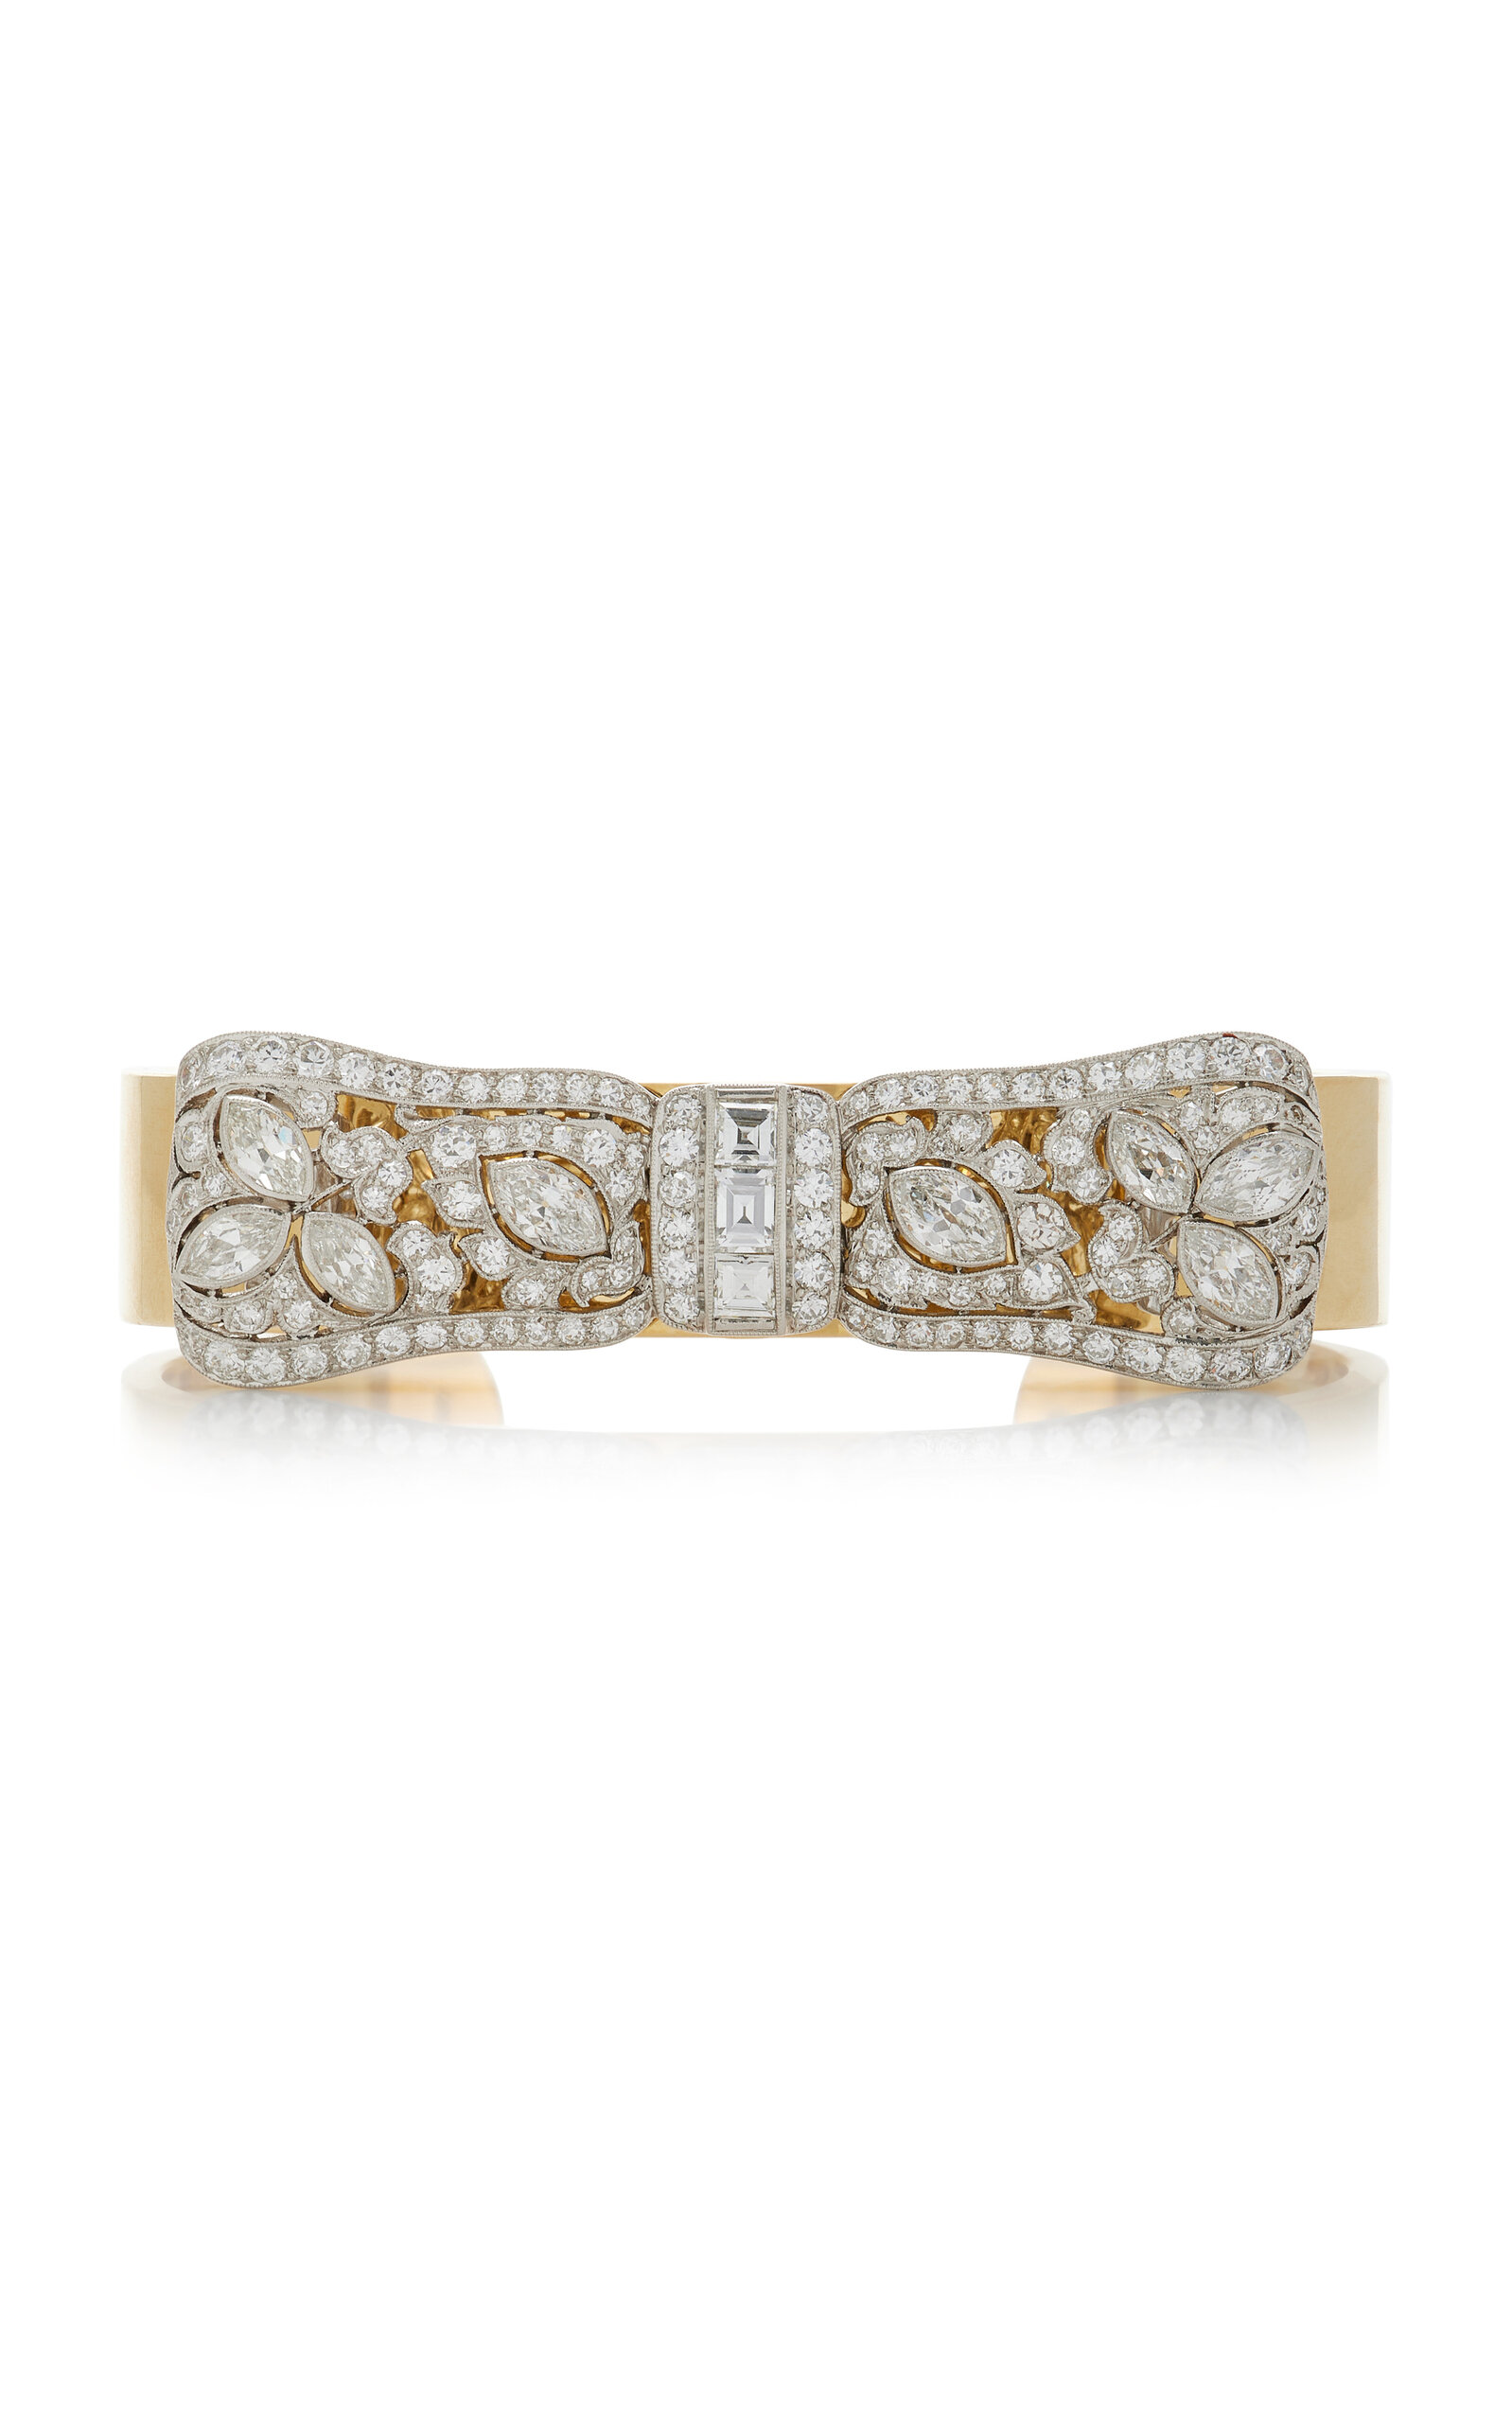 One-of -a-Kind Platinum and 18K Yellow Gold Diamond Edwardian Bow Bracelet